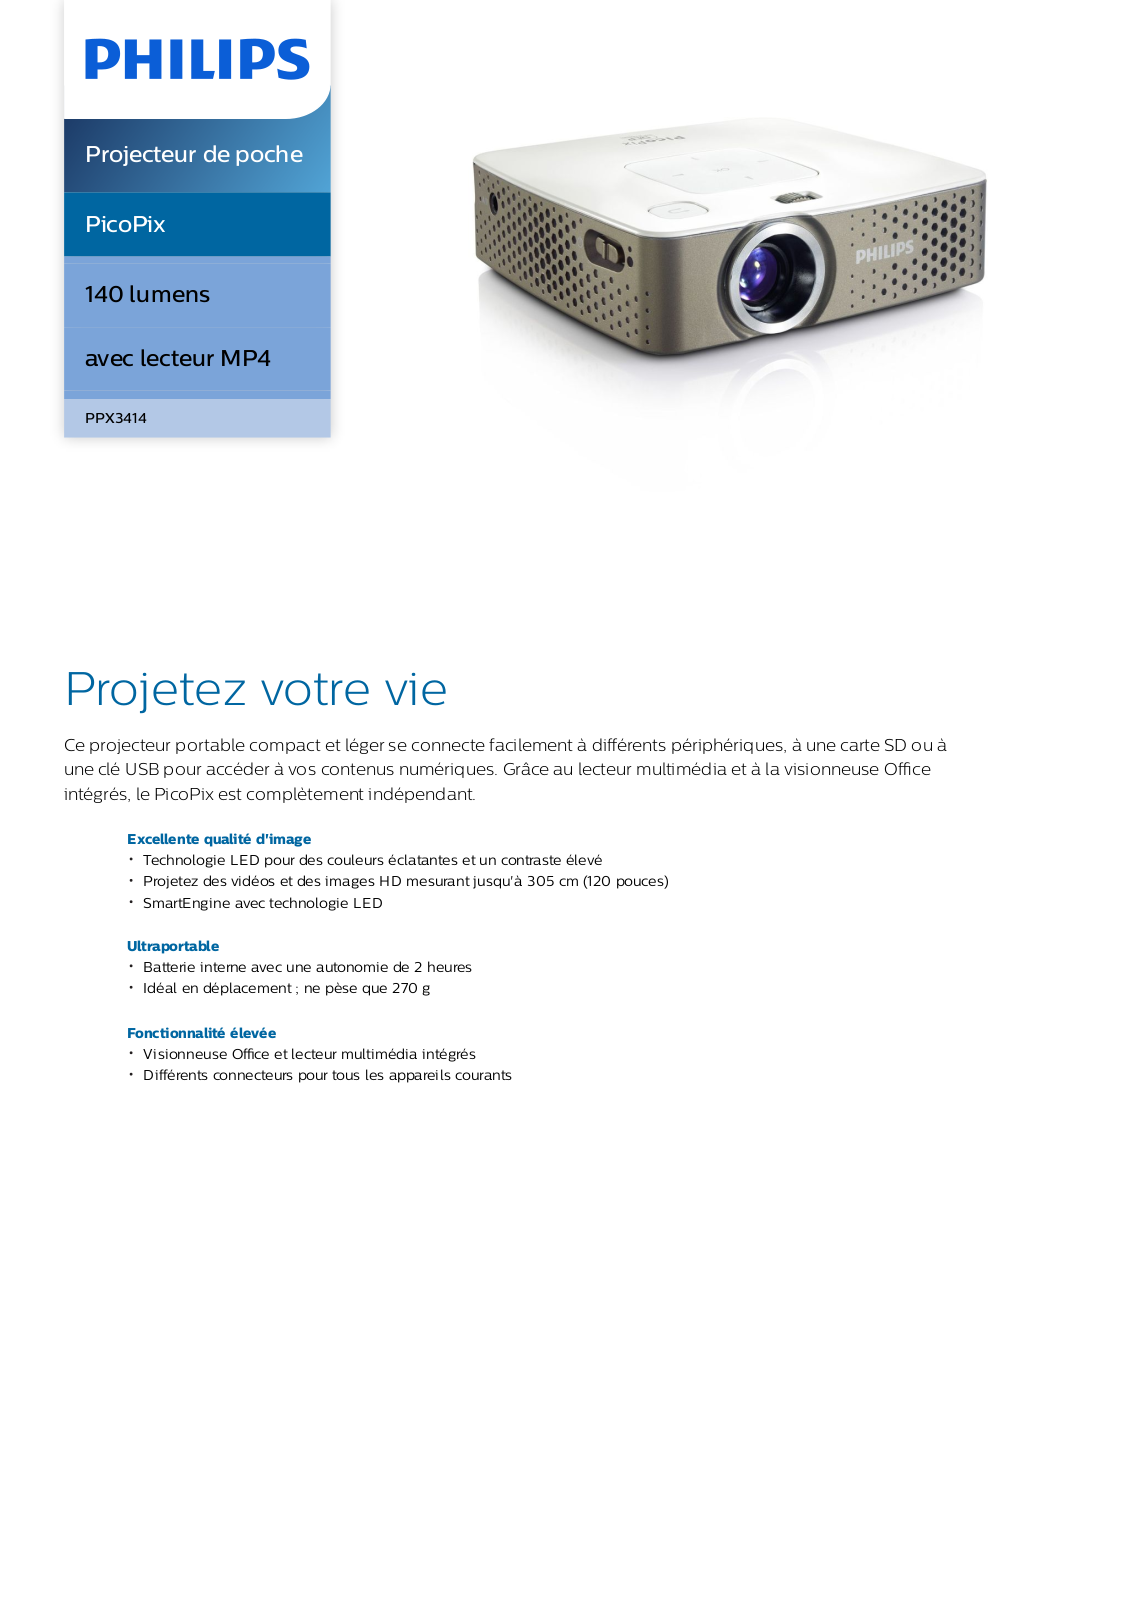 Philips PPX3414/EU product sheet